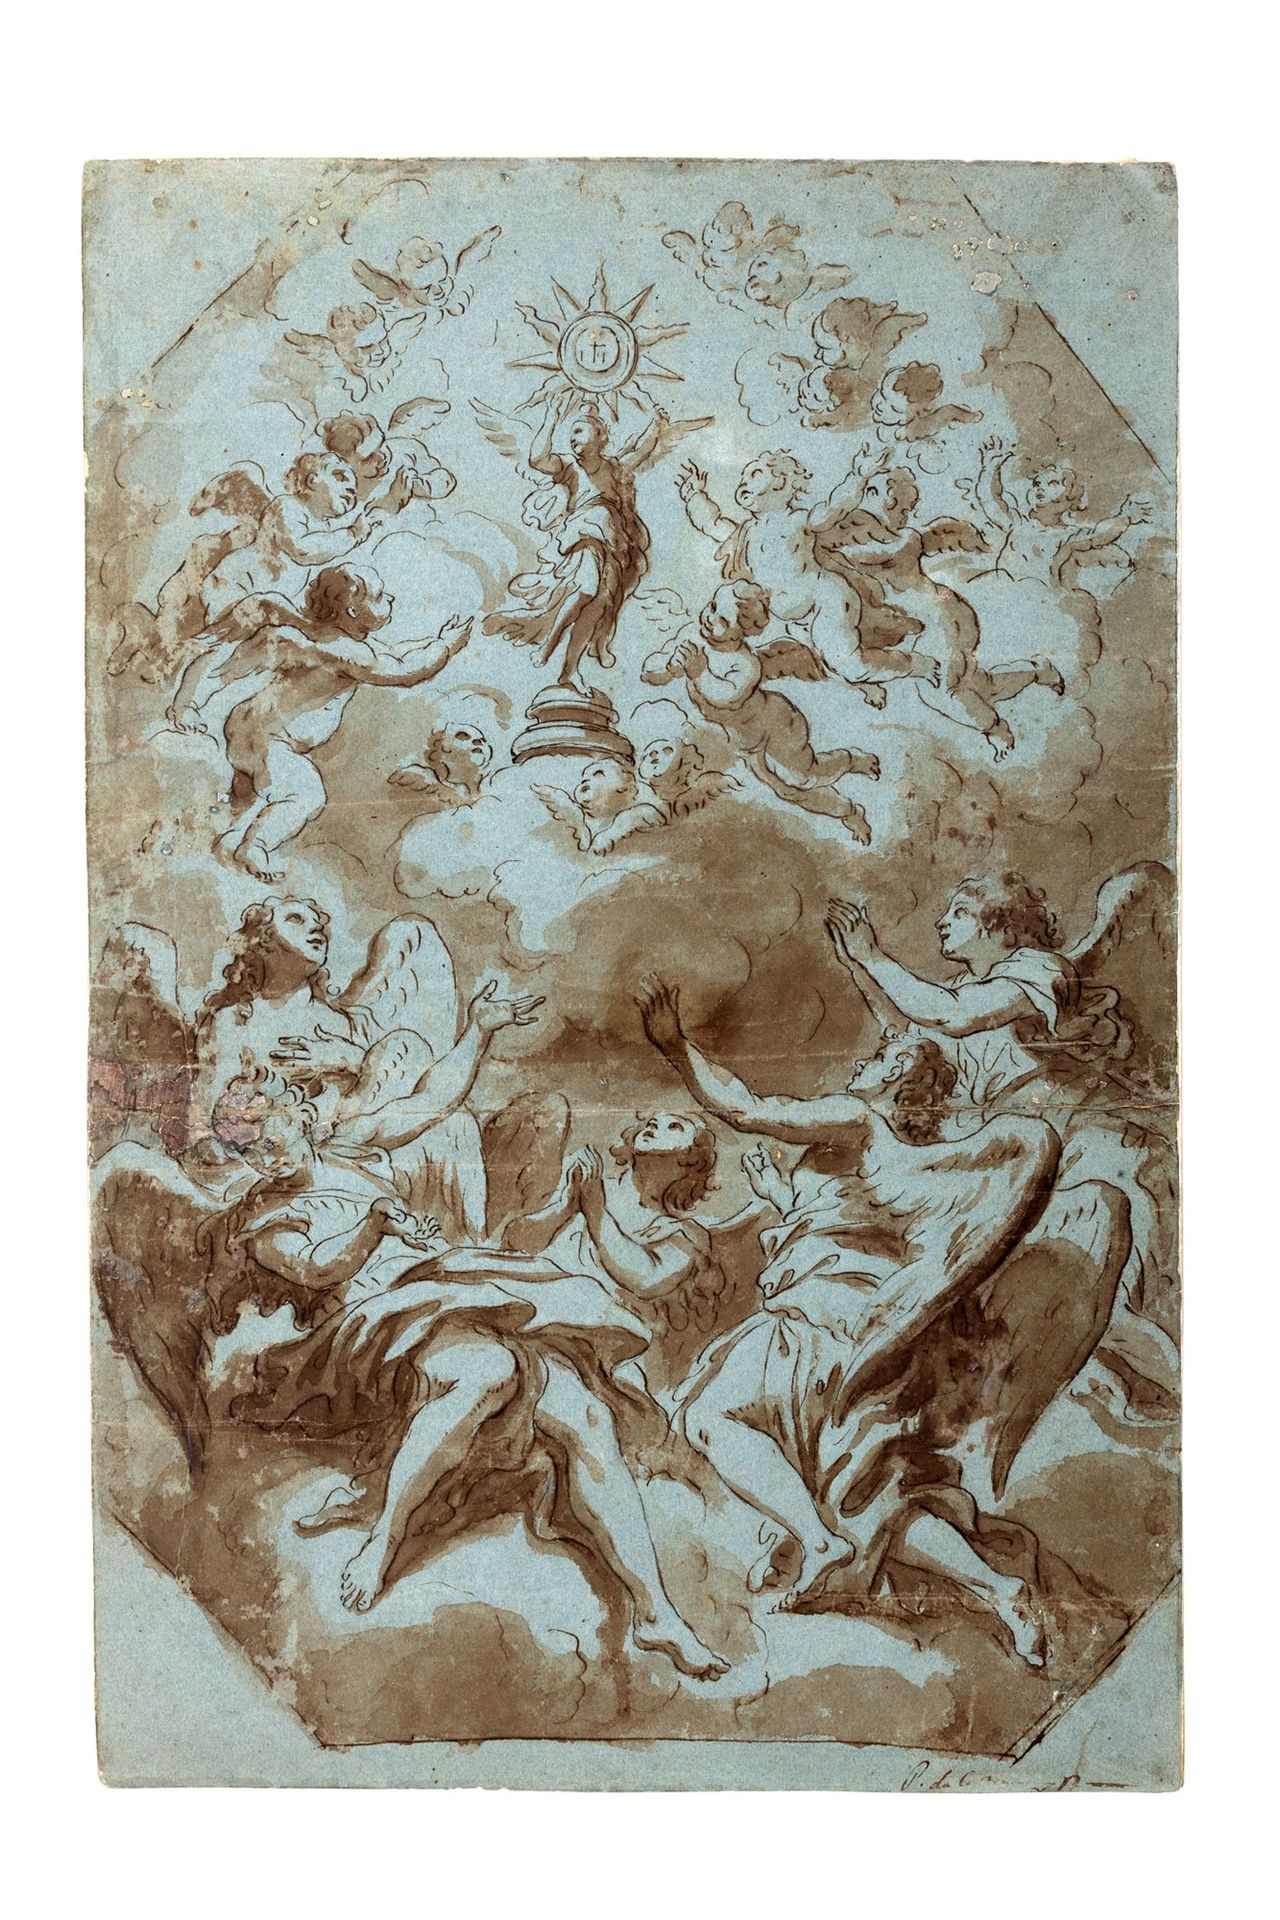 Scuola romana, secolo XVII 耶稣圣名崇拜的壁画研究

蓝色预备纸上的钢笔和棕色墨水
463 x 311 mm
右下角有题字的痕迹 P.&hellip;